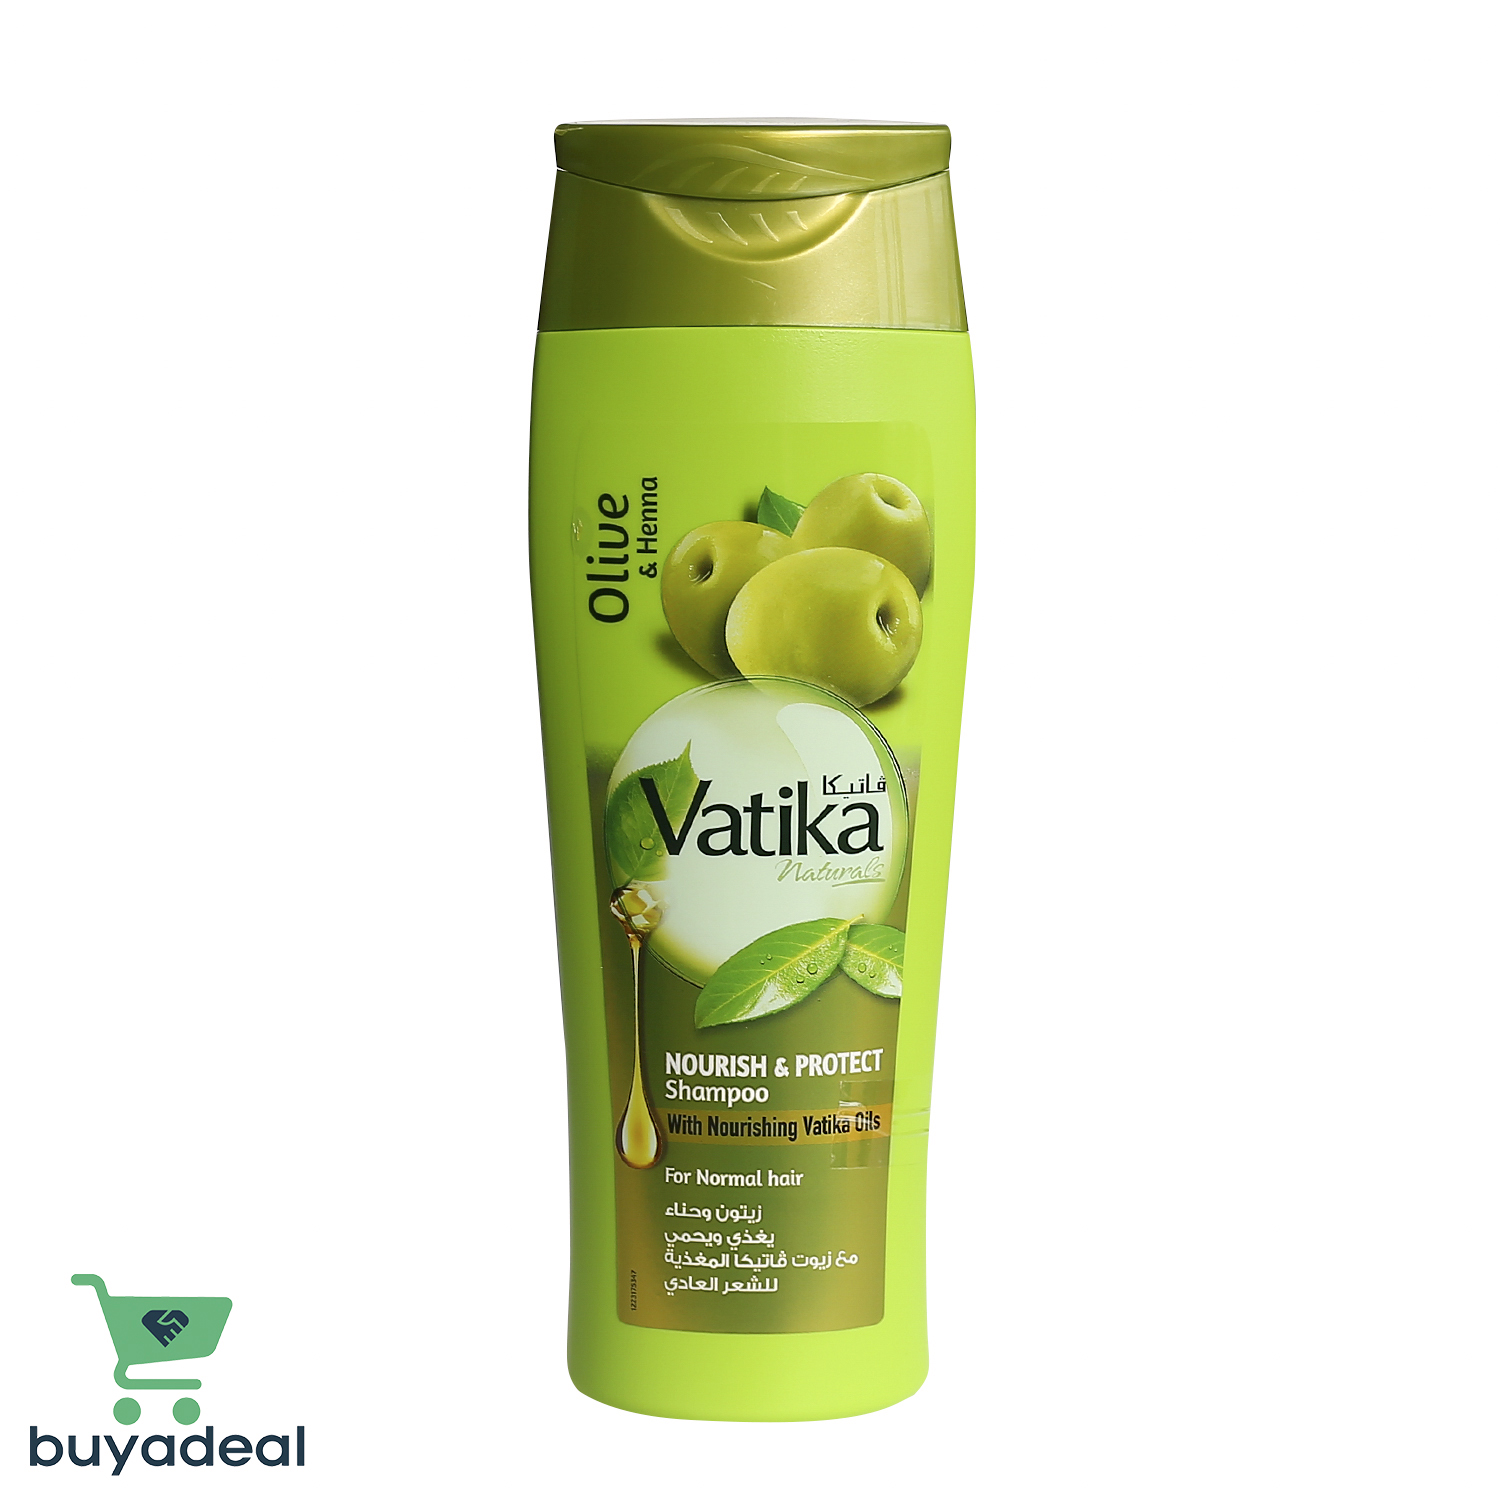 Buyadeal Product Vatika Olive And Henna Nourish And Protect Shampoo 200ml